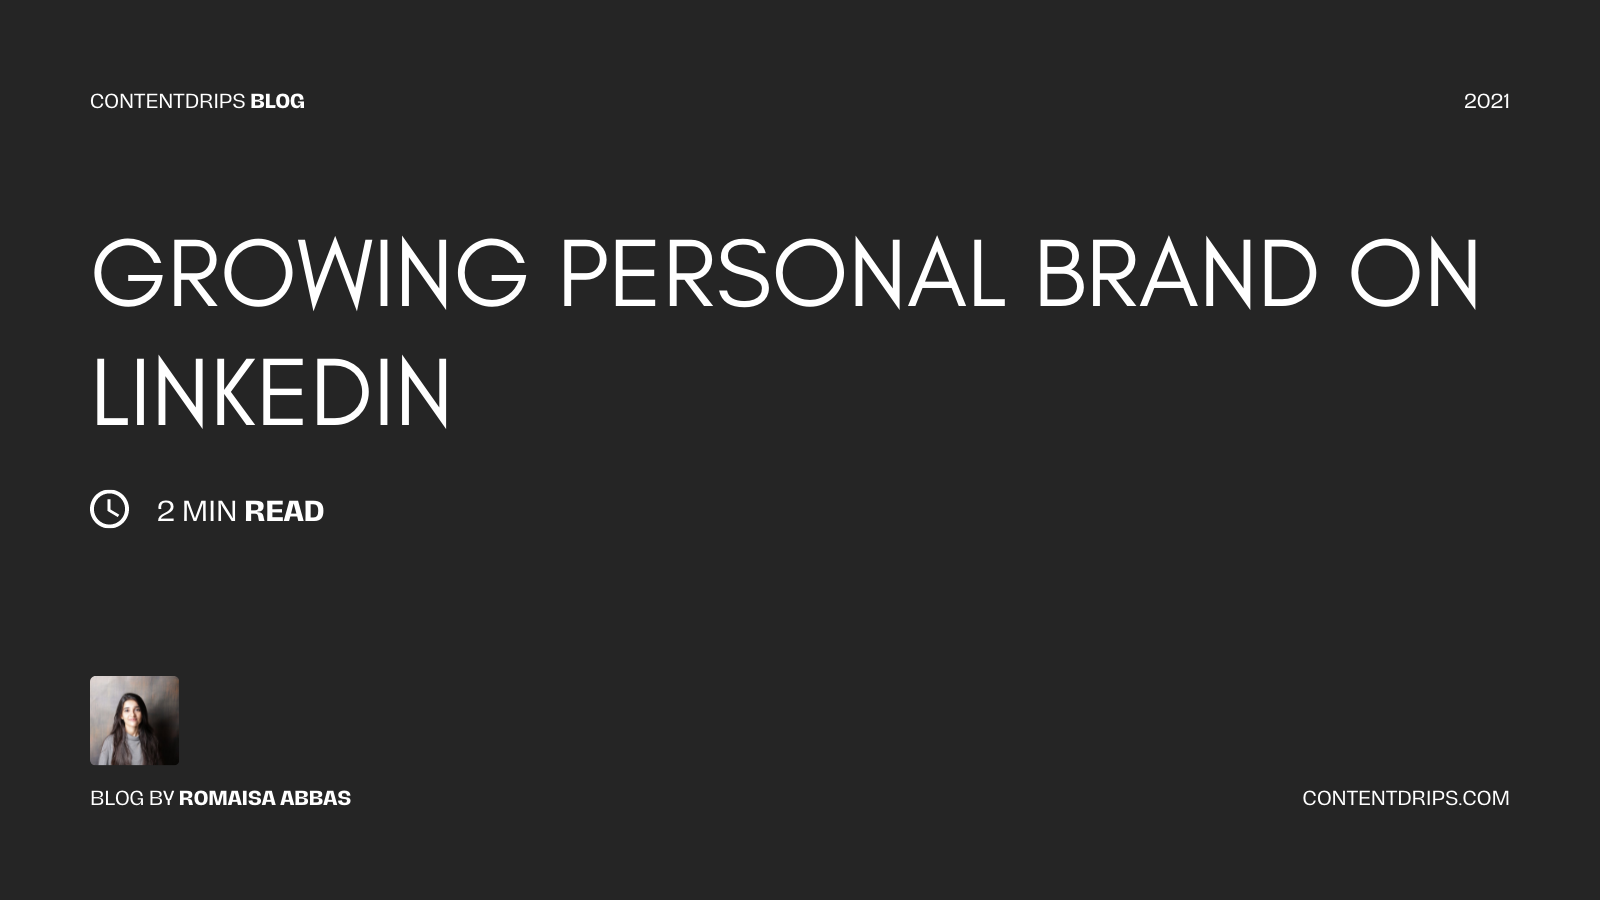 Personal brand on LinkedIn